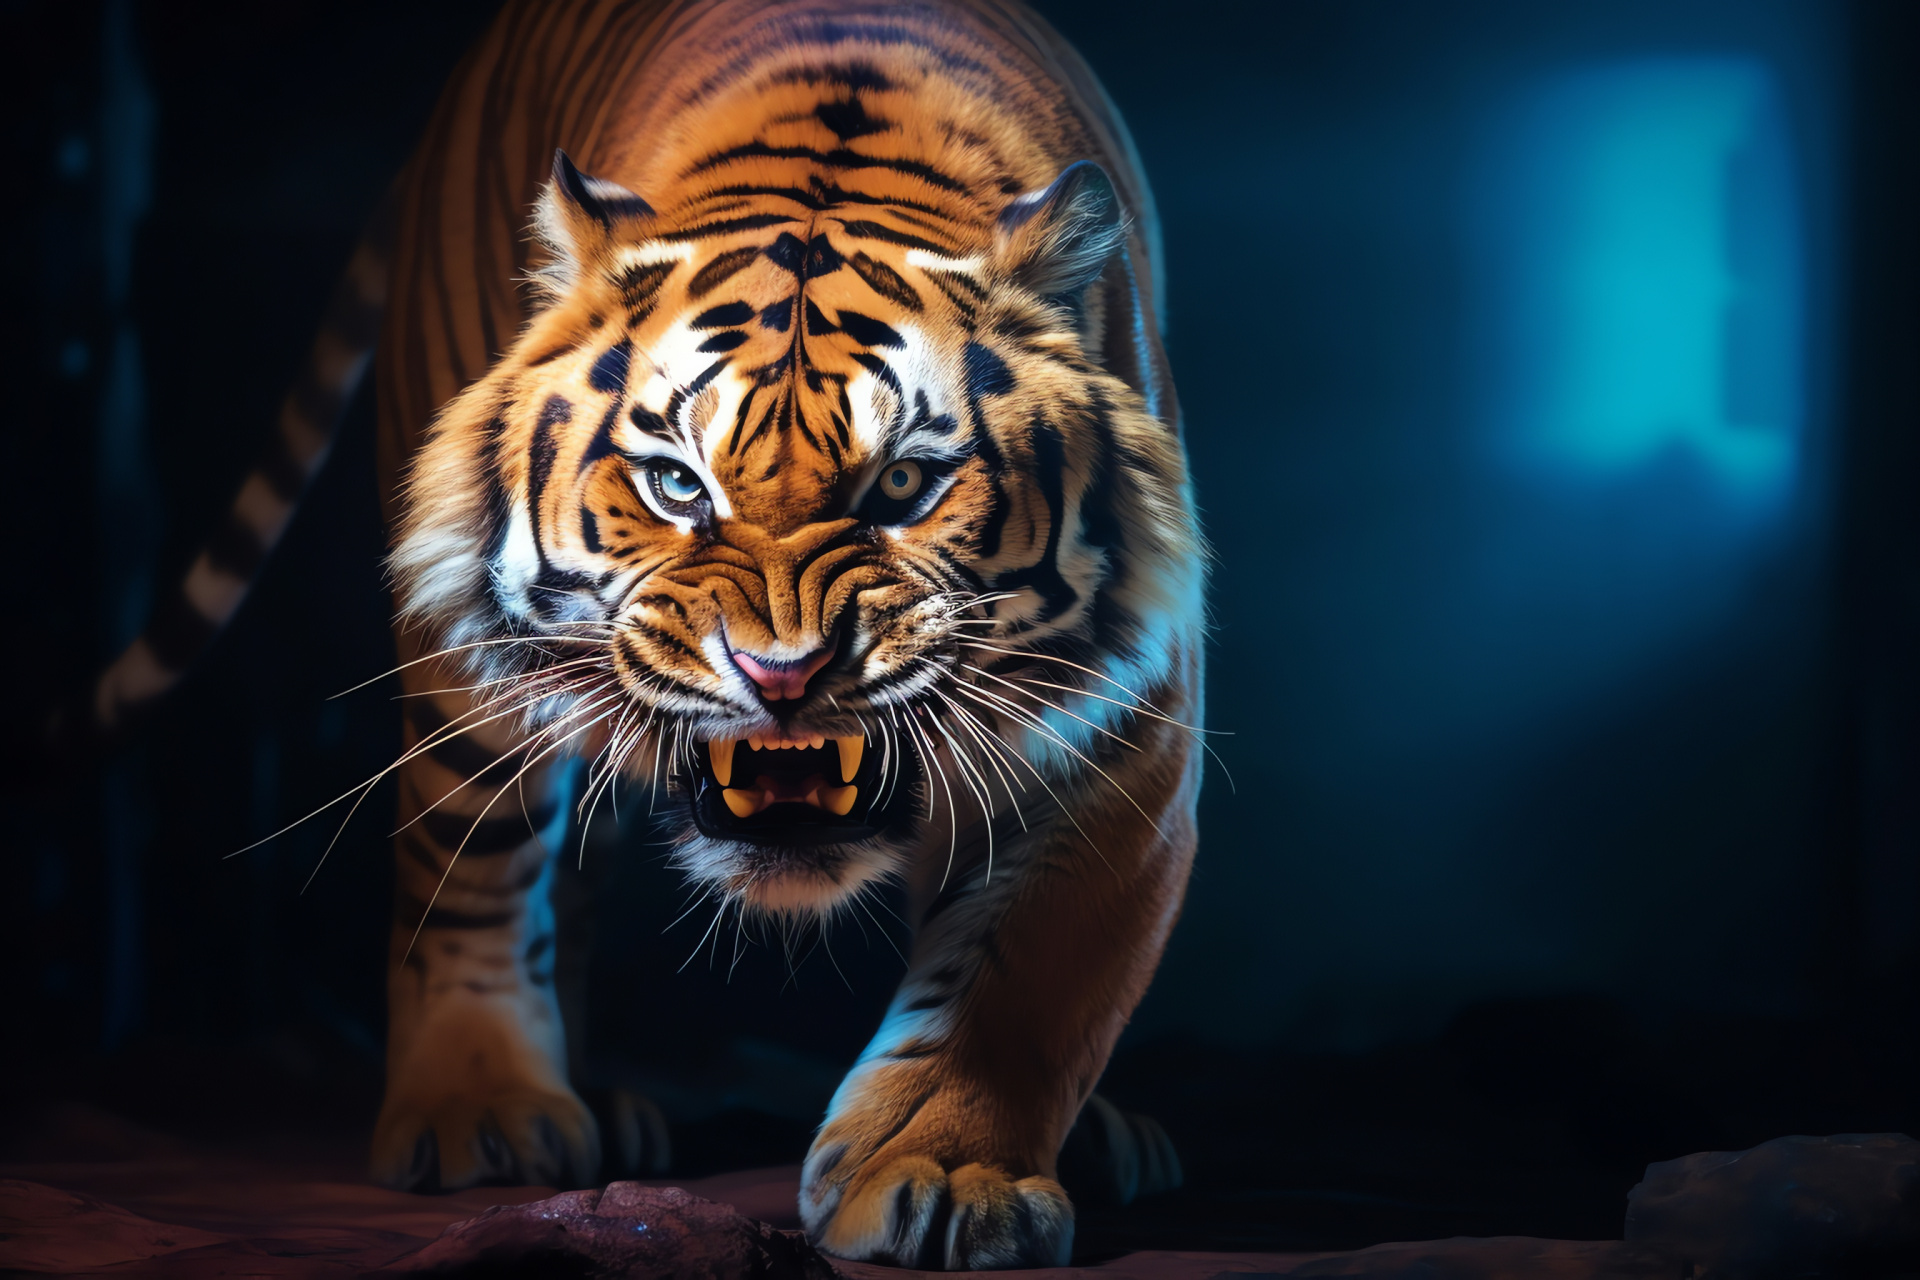 Saber Tooth Tiger, Prehistoric creature, Extinct feline, Ice Age mammal, Pleistocene era, HD Desktop Image